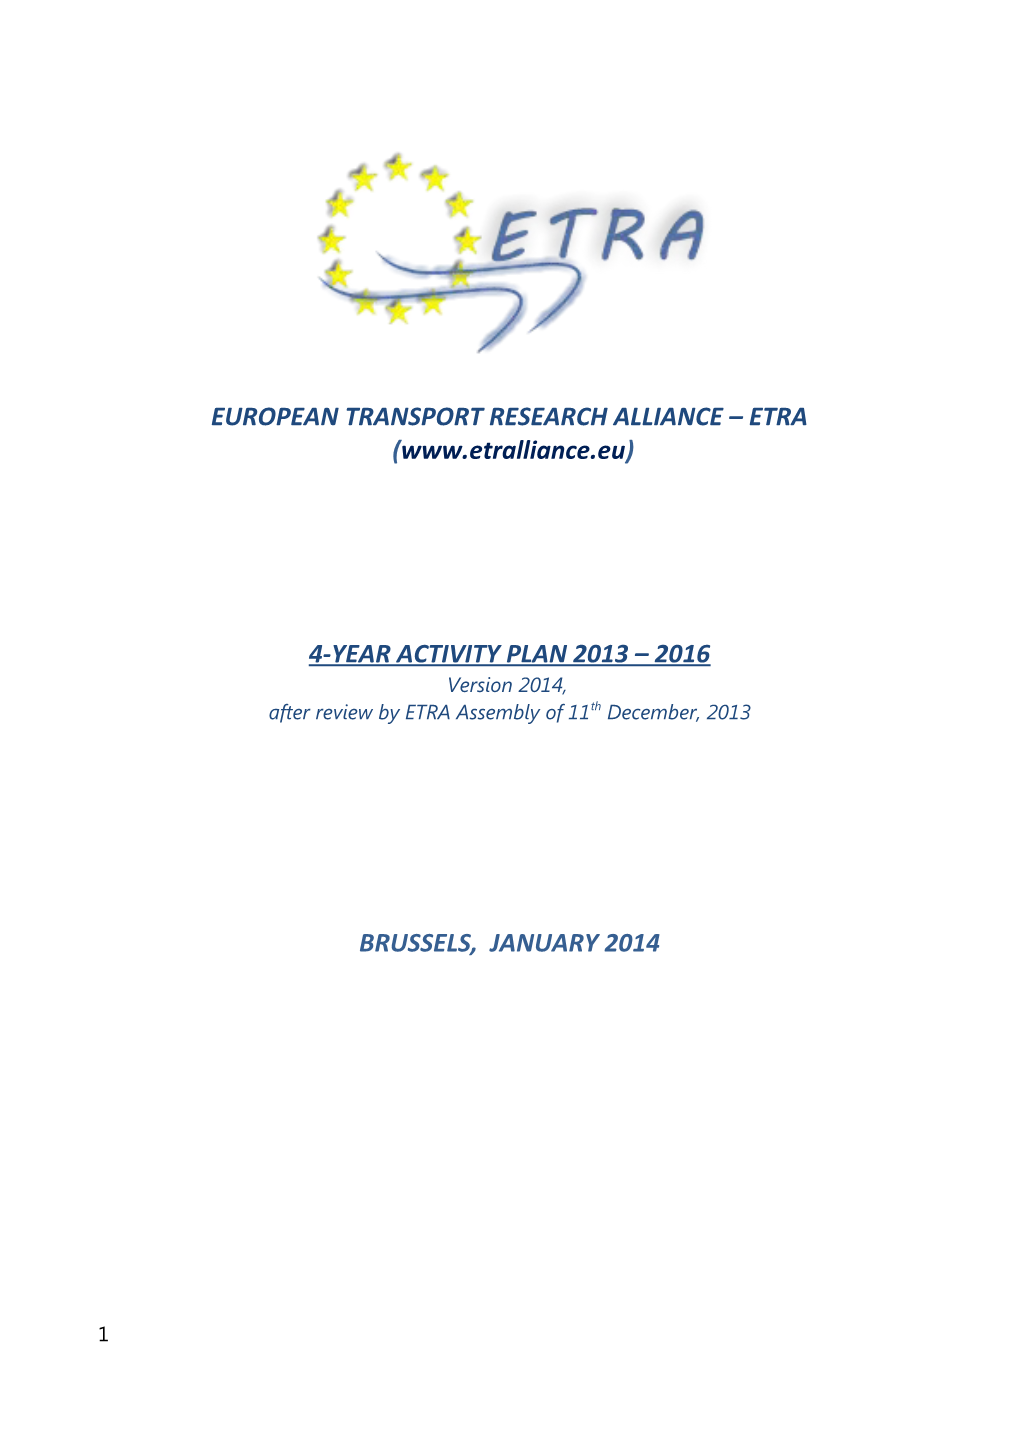 European Transport Research Alliance Etra